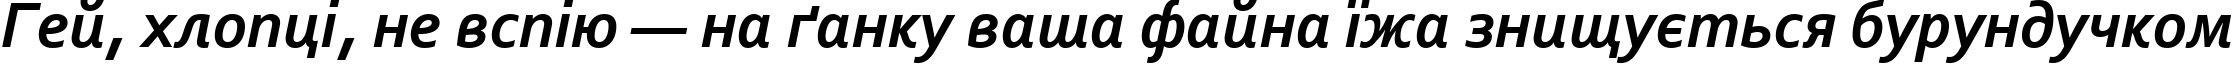 Пример написания шрифтом Corbel Bold Italic текста на украинском